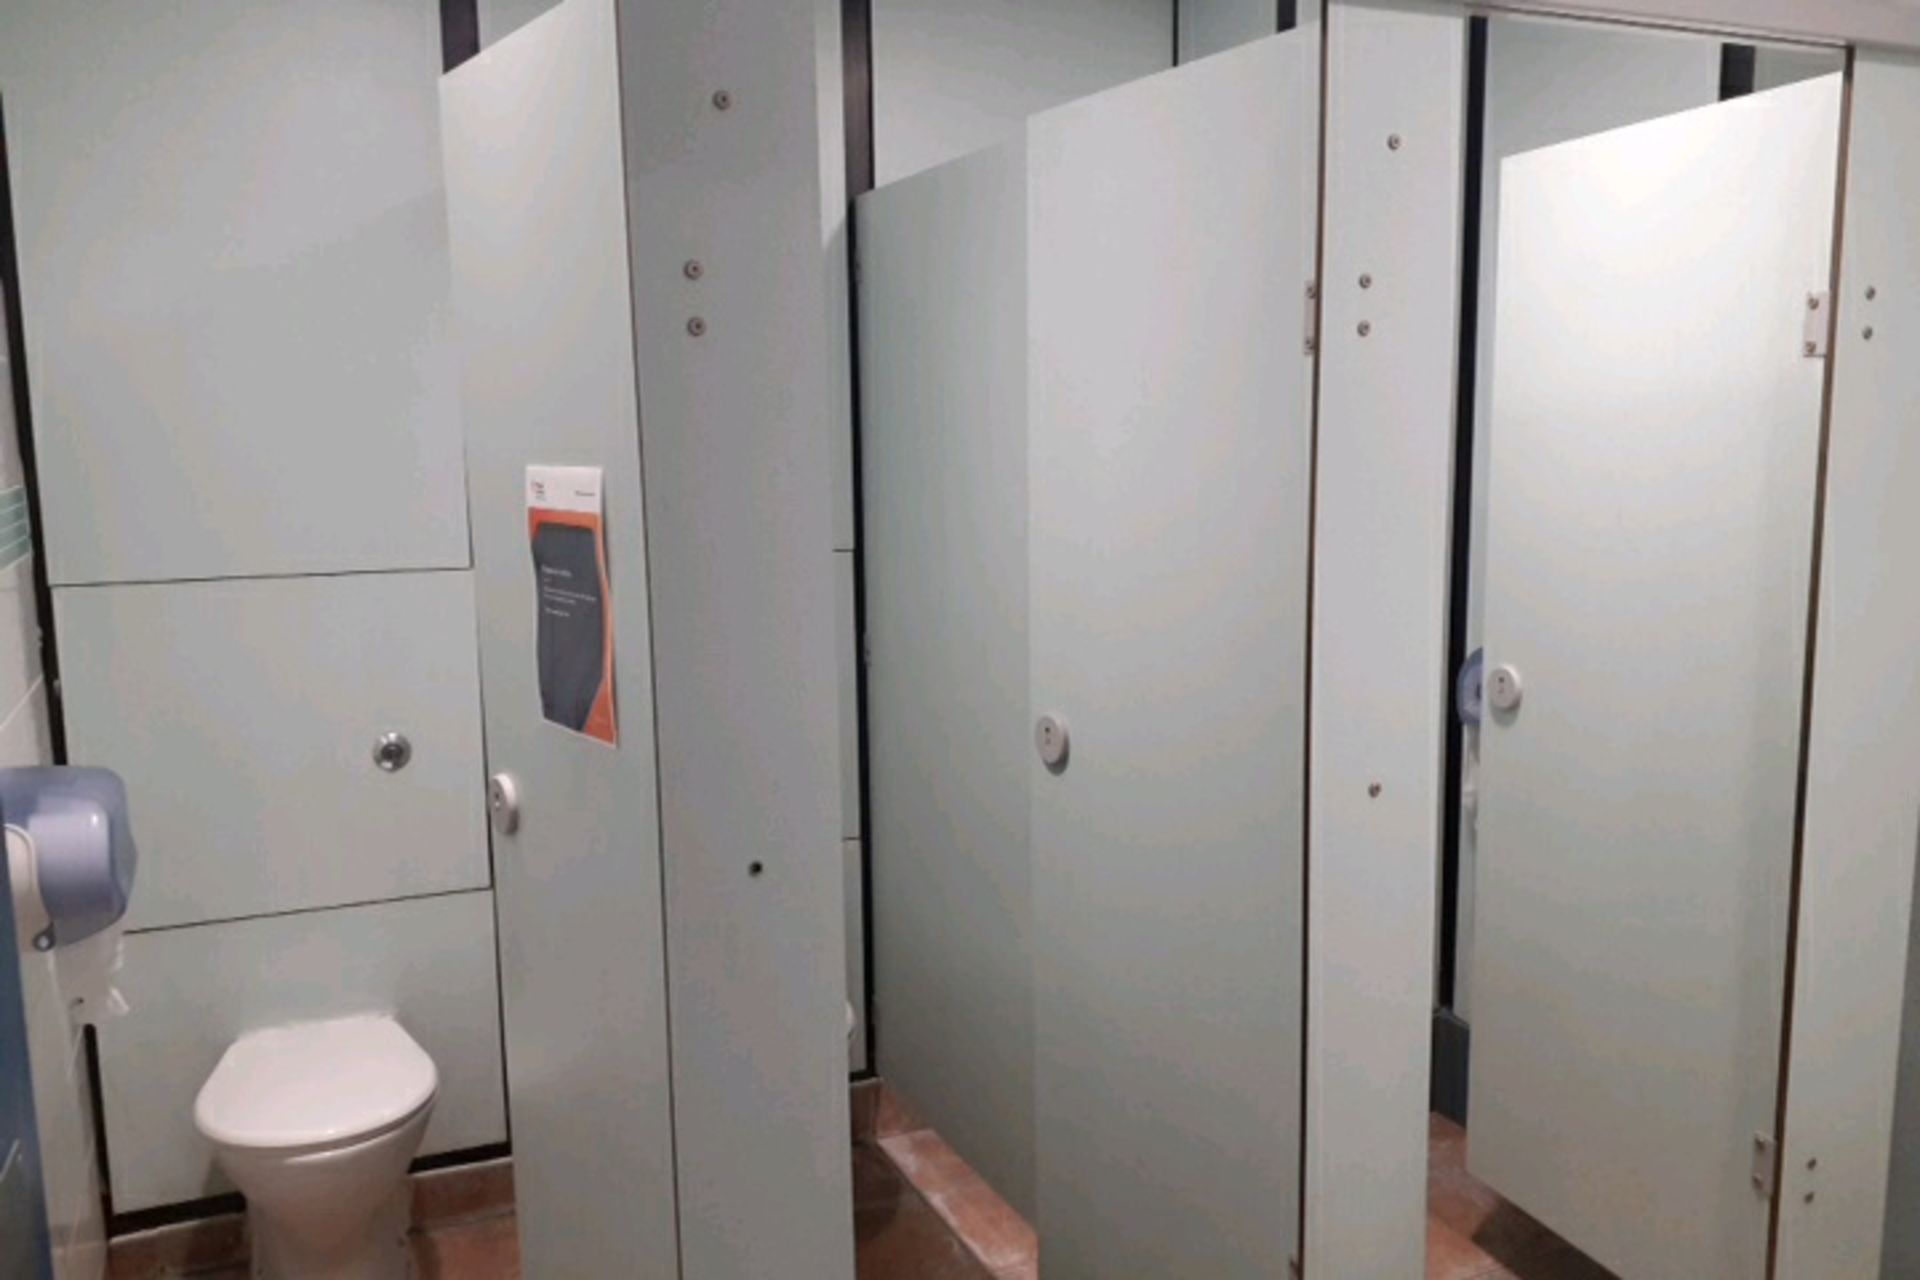 Female toilets